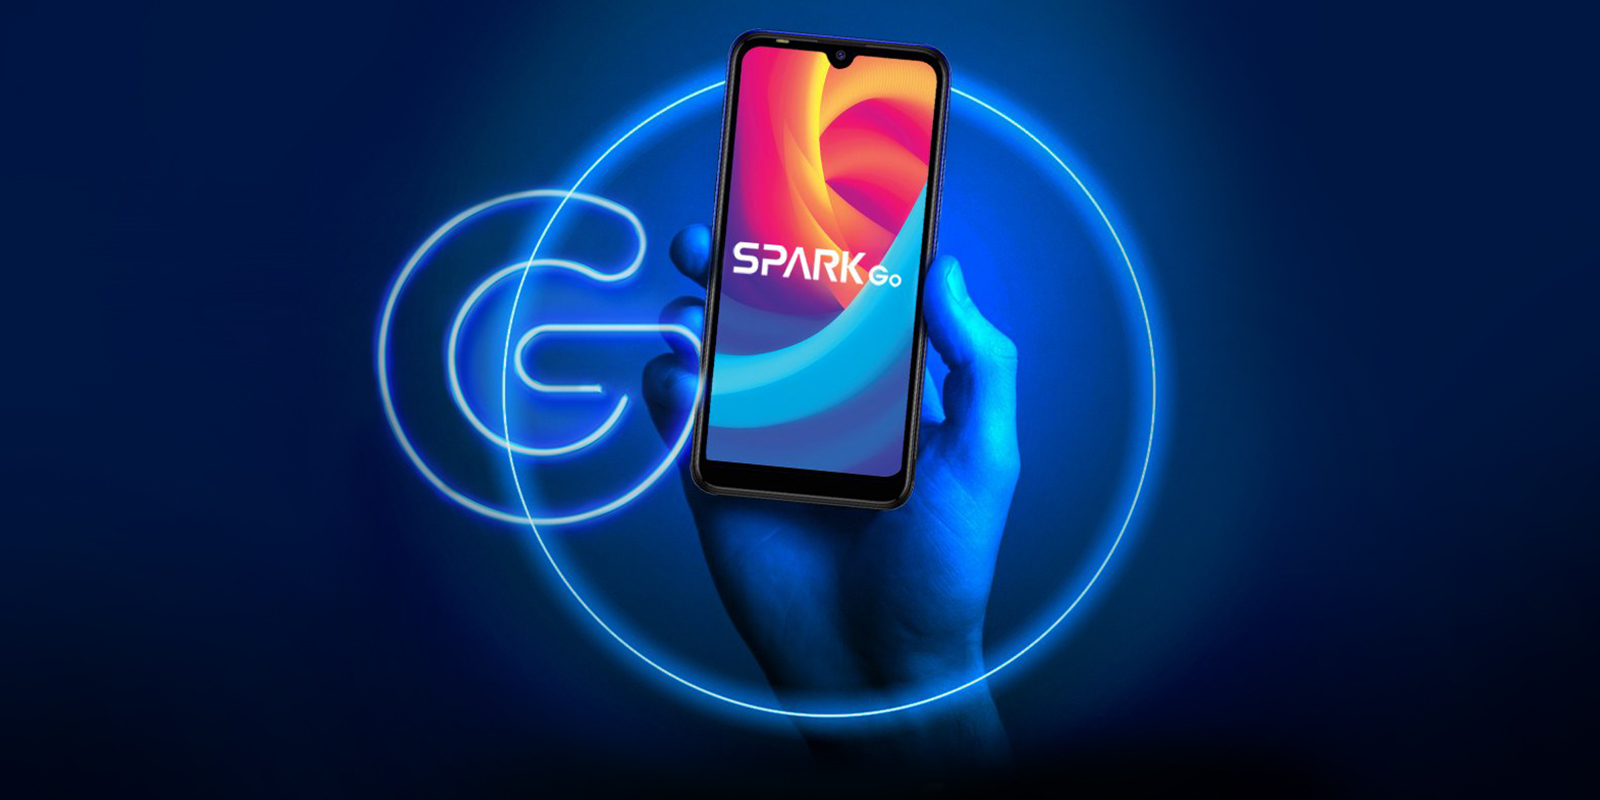 TECNO Spark GO smartphone